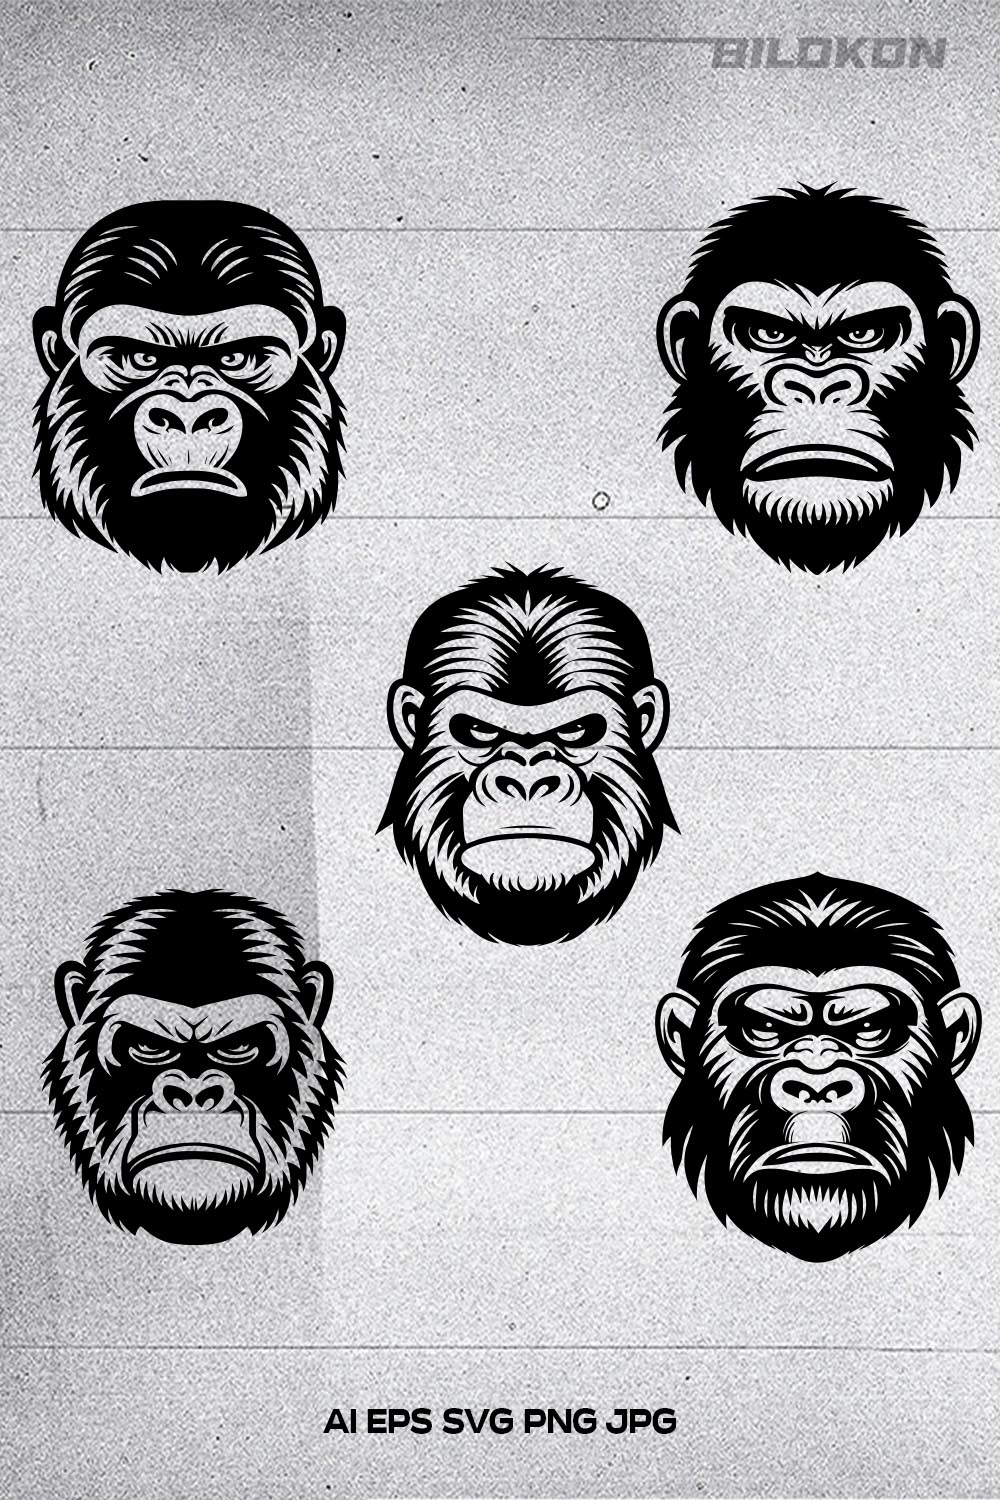 Gorilla head, gorilla face icon, SVG, Vector, Illustration pinterest preview image.